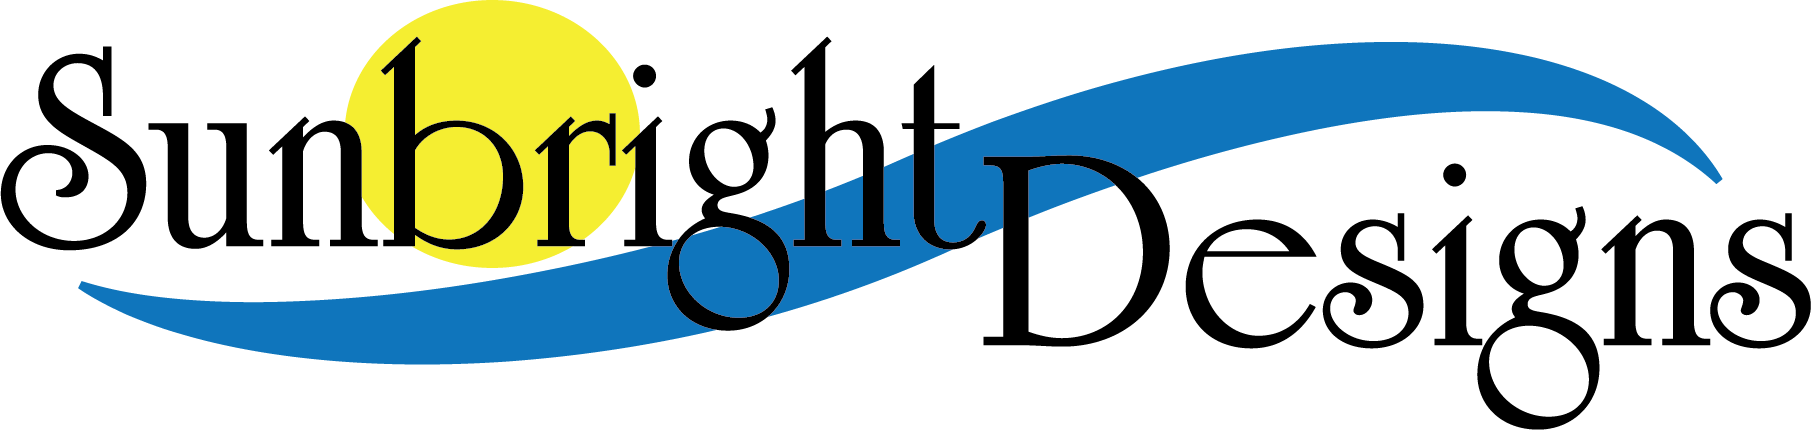 Sunbright Designs logo